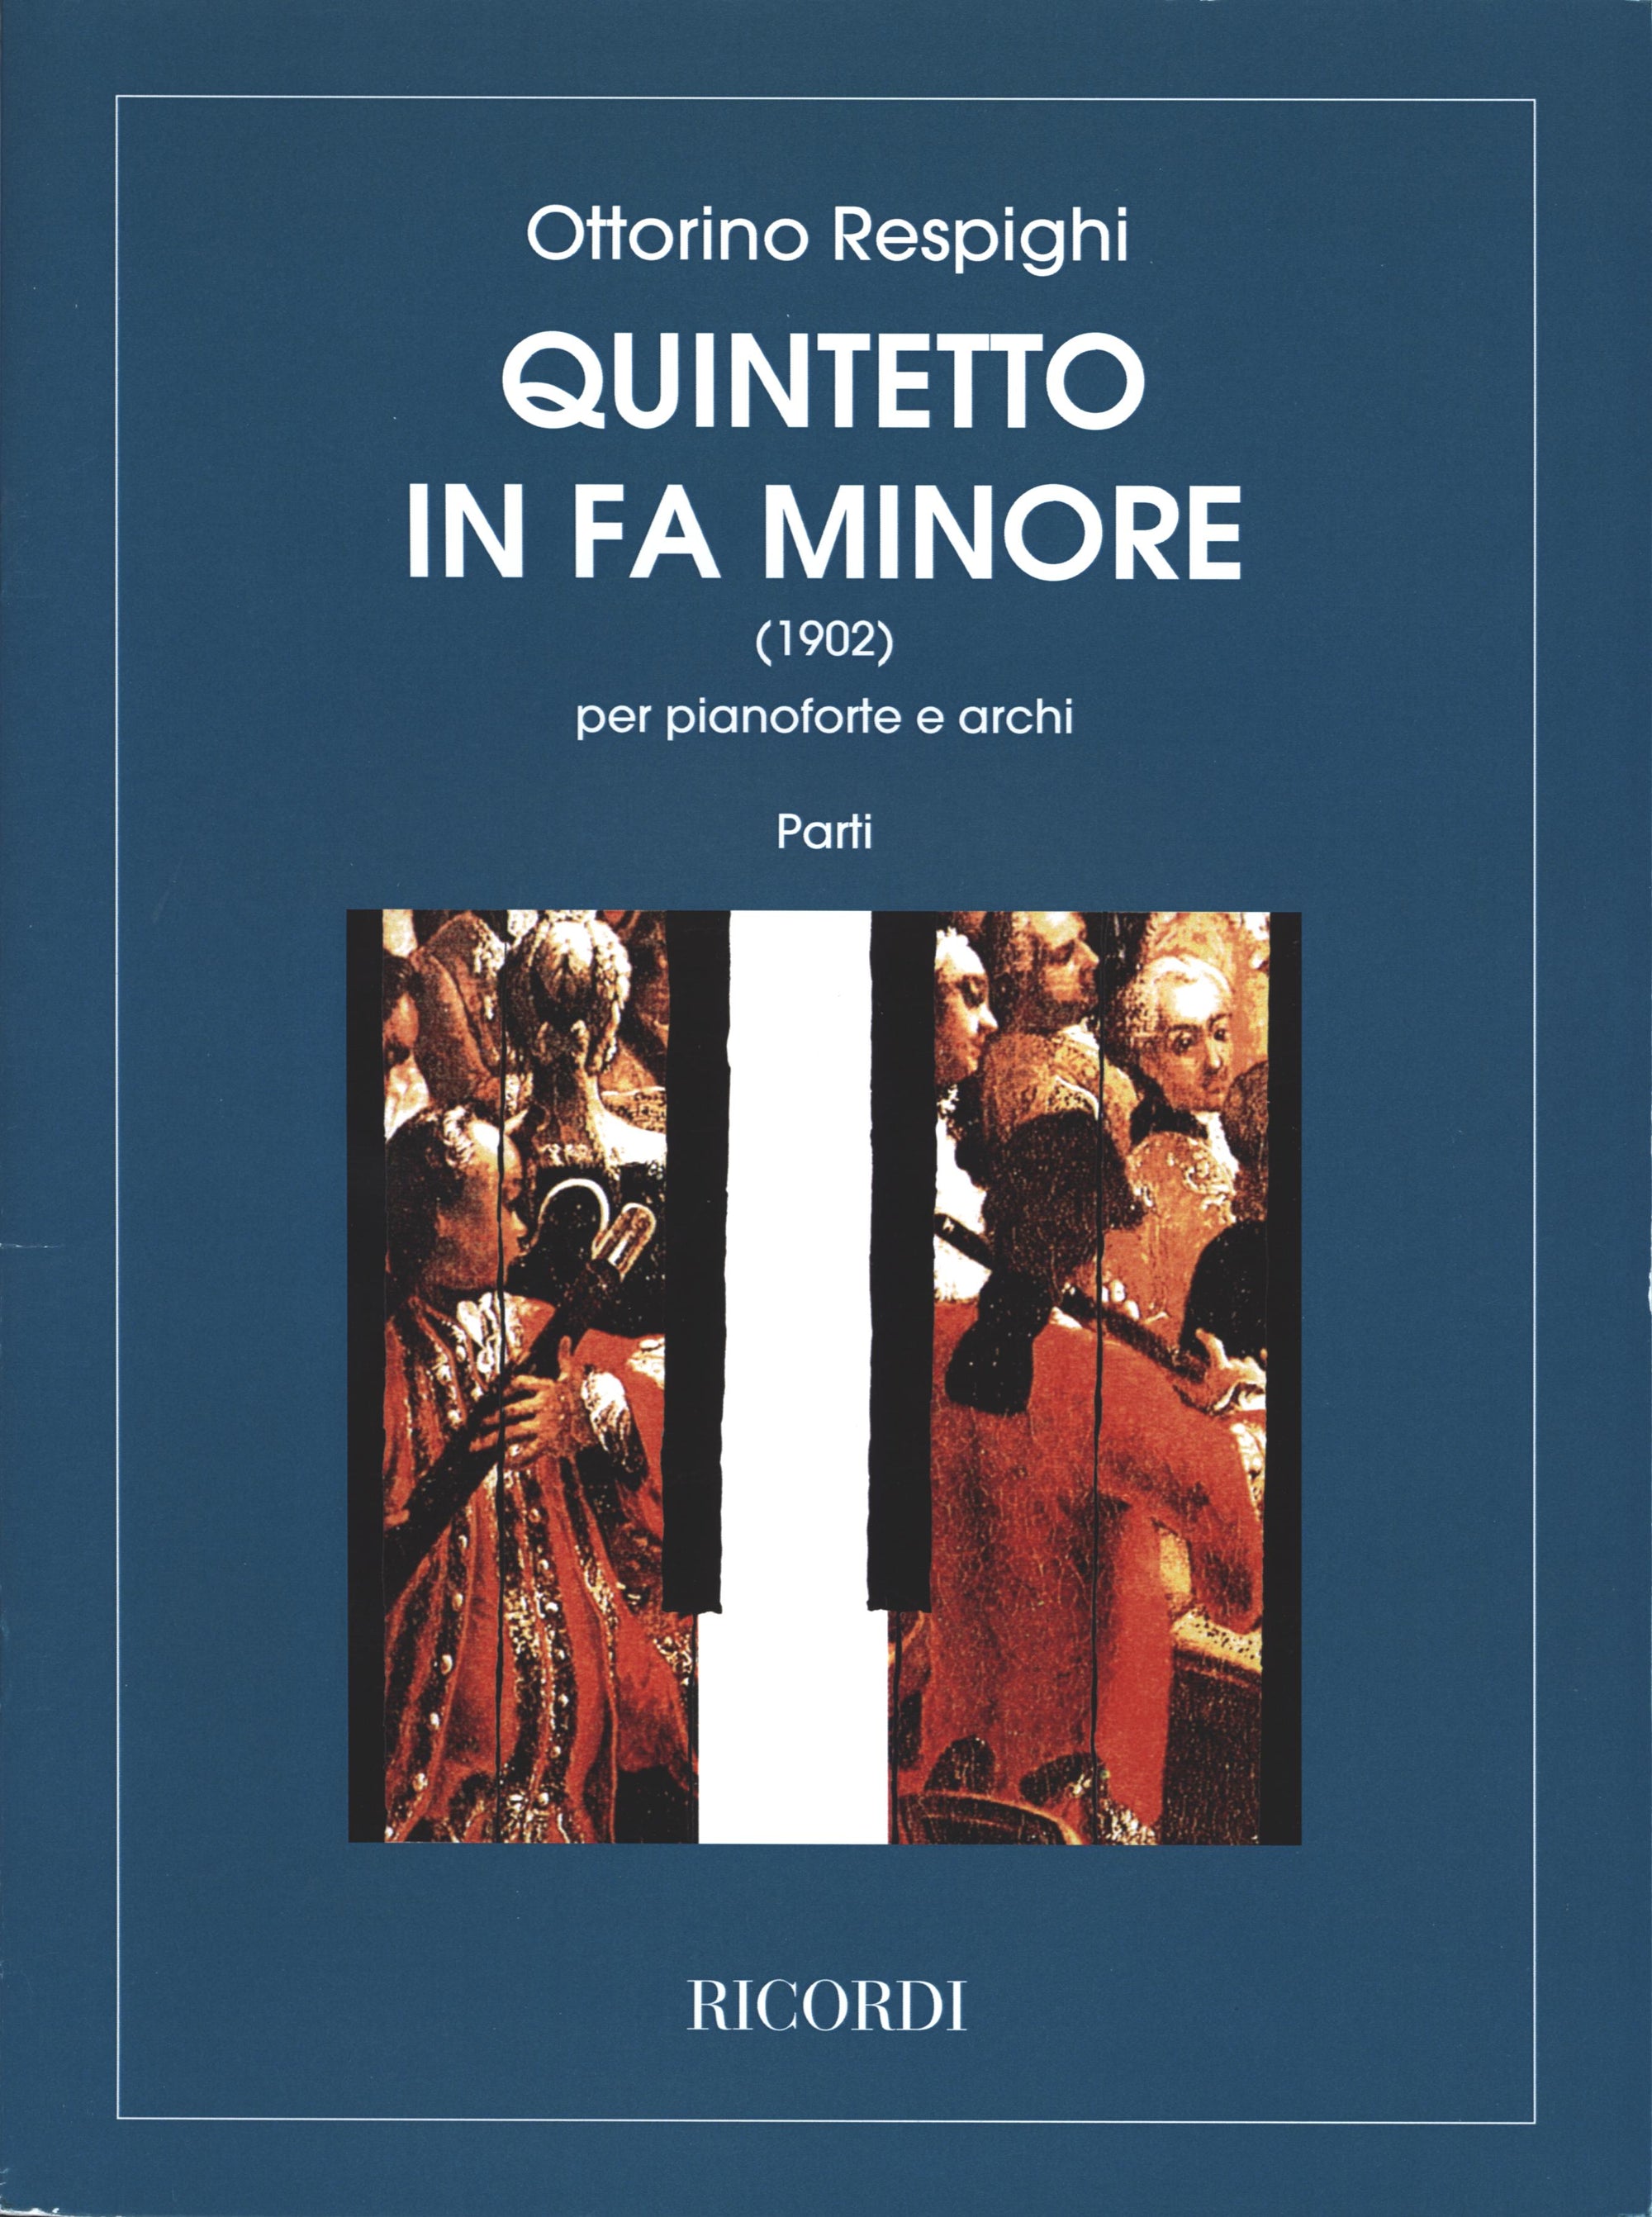 Respighi: Piano Quintet in F Minor